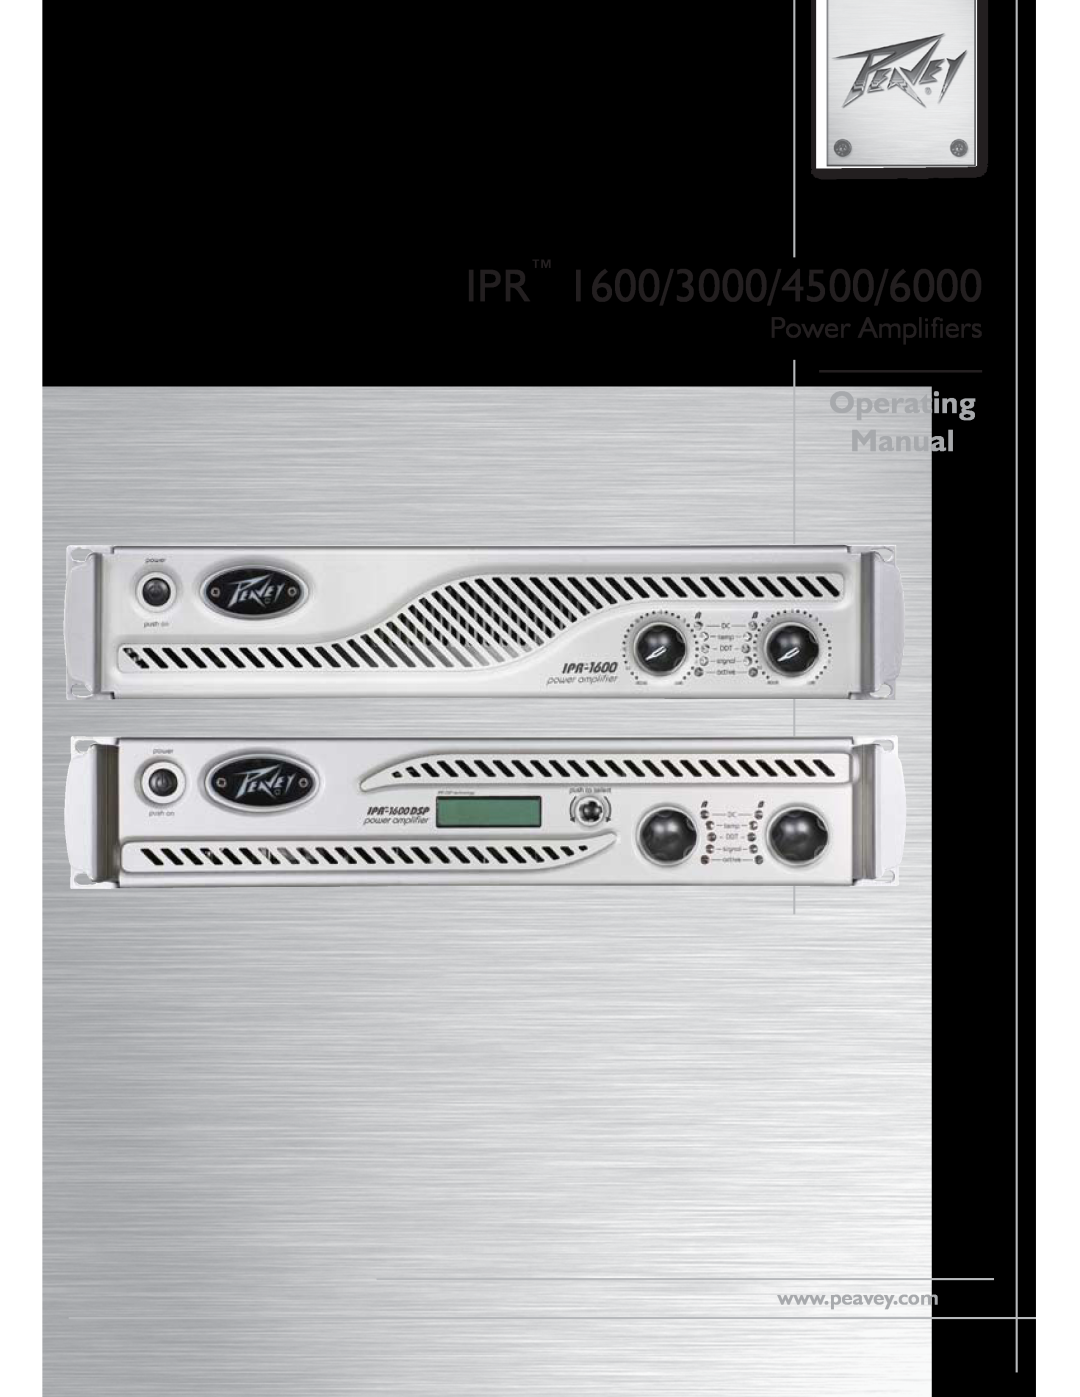 Peavey IPR 6000, IPR 3000, IPR 4500 manual IPR 1600/3000/4500/6000, Operating Manual, Power Amplifiers 